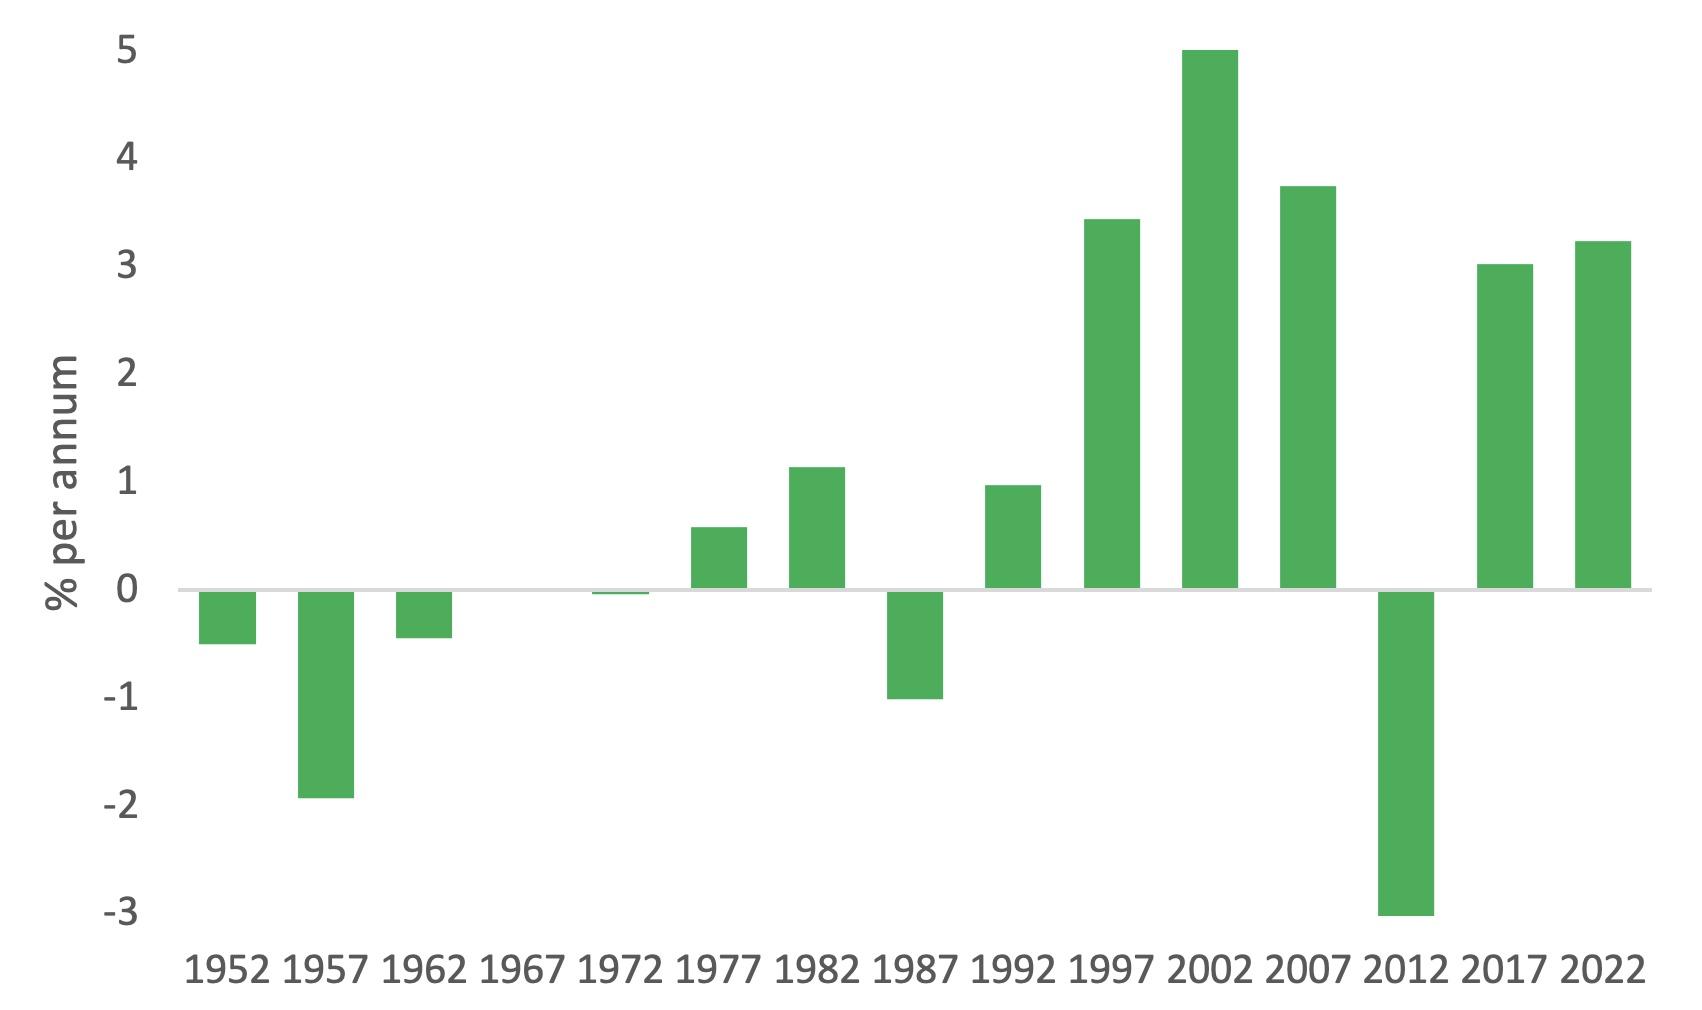 Figure 1 Ireland: Employment growth in five-yearly intervals, 1947-2022